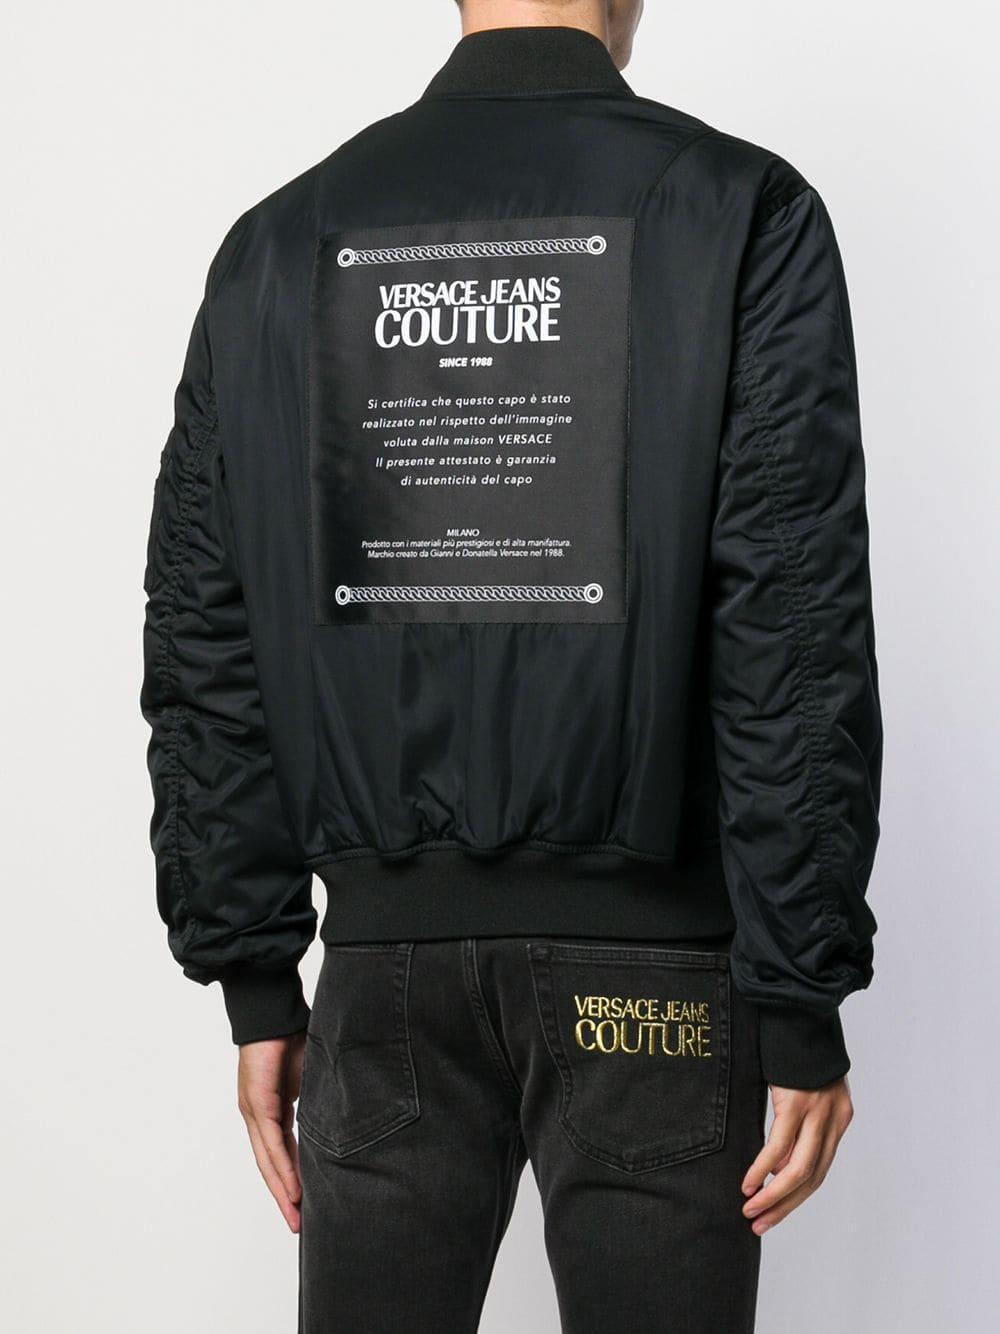 Versace Jeans Couture Denim Etichetta Label Bomber Jacket in Black for Men  - Lyst